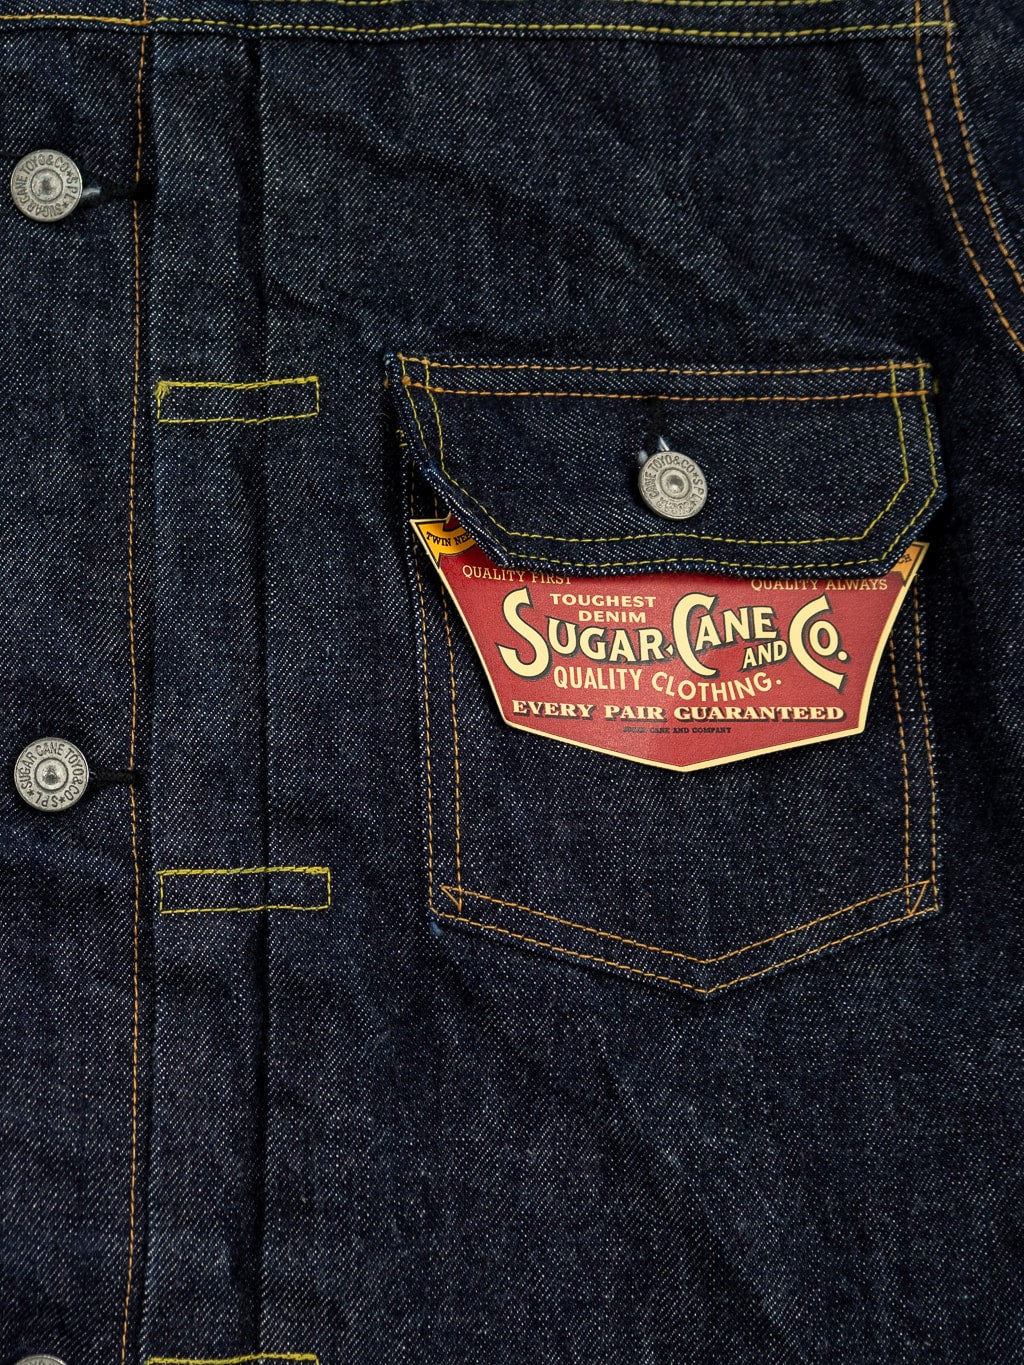 sugar cane 1953 type II denim jacket front pocket detail